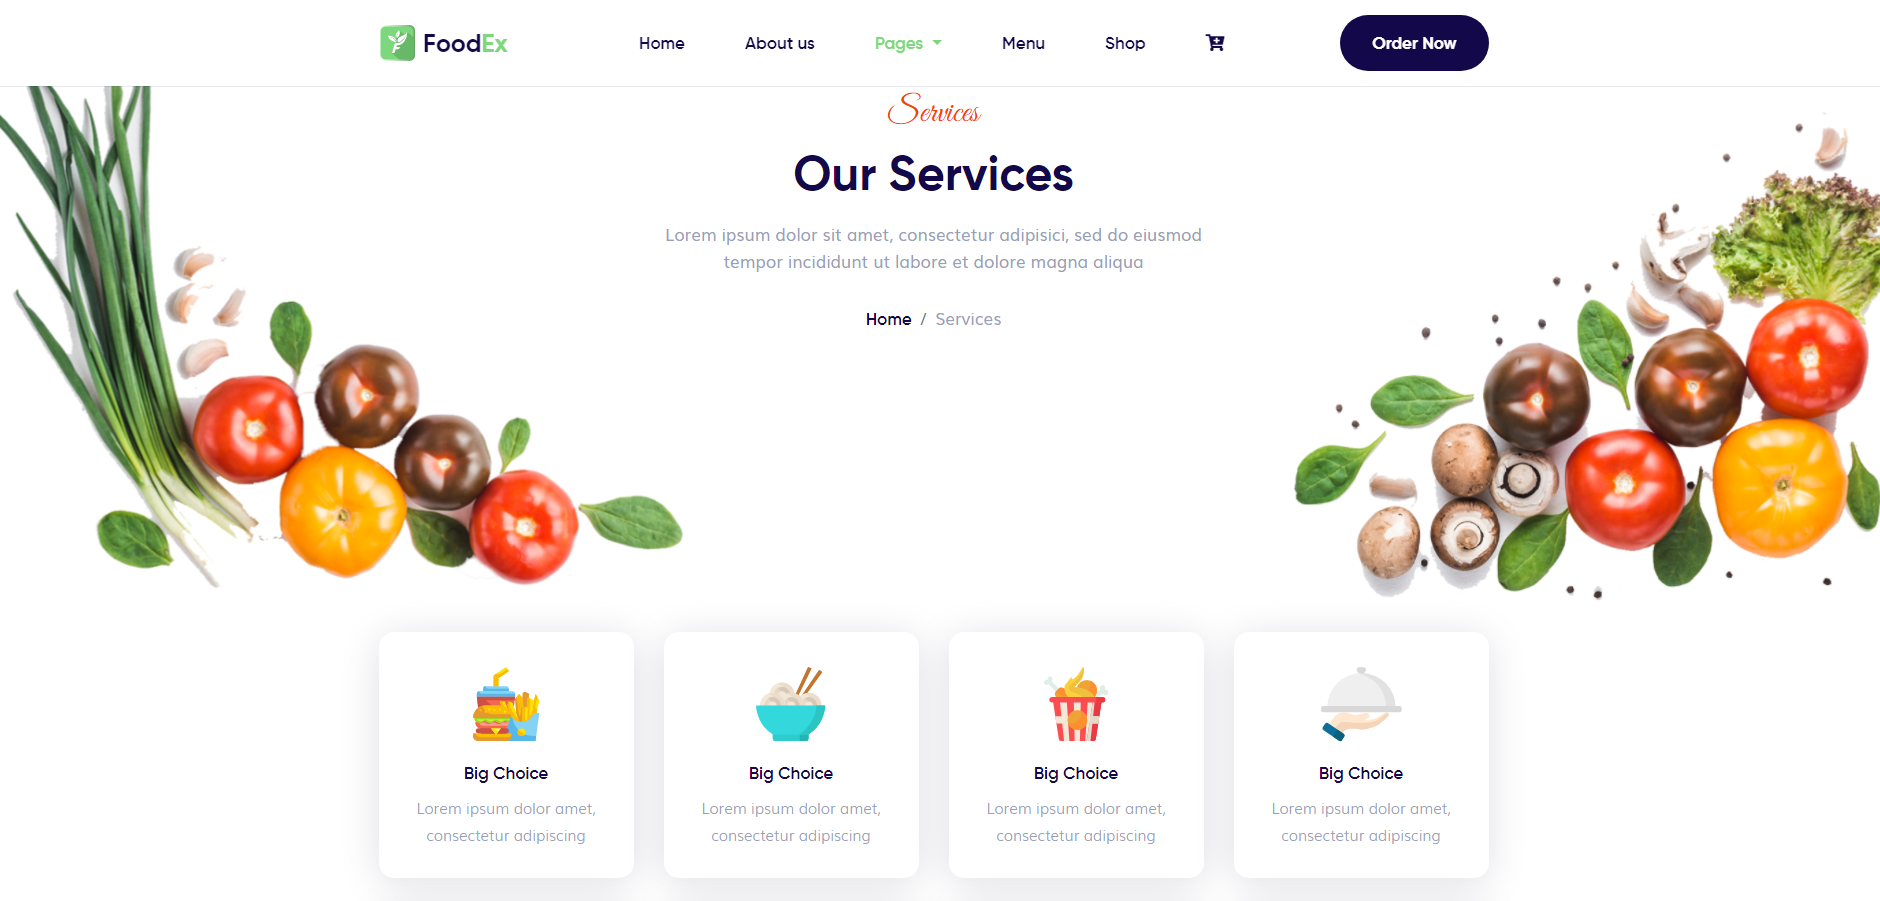 FoodEx - HTML Template For Food & Restaurant Website (4)